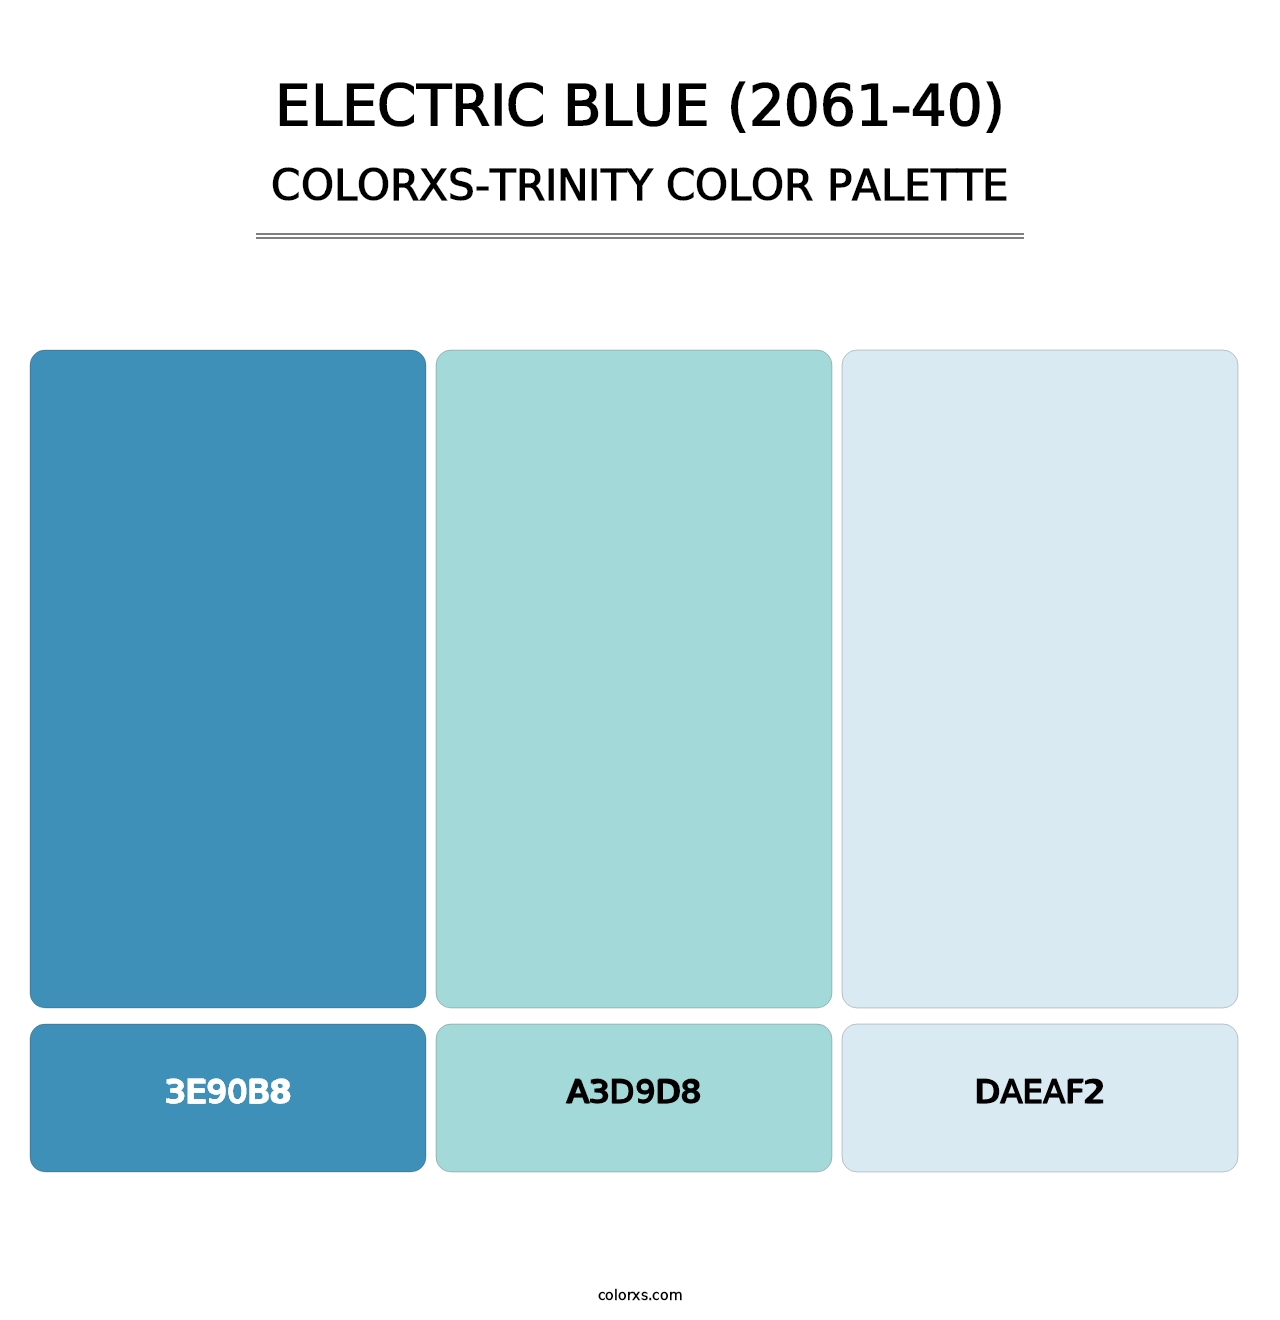 Electric Blue (2061-40) - Colorxs Trinity Palette